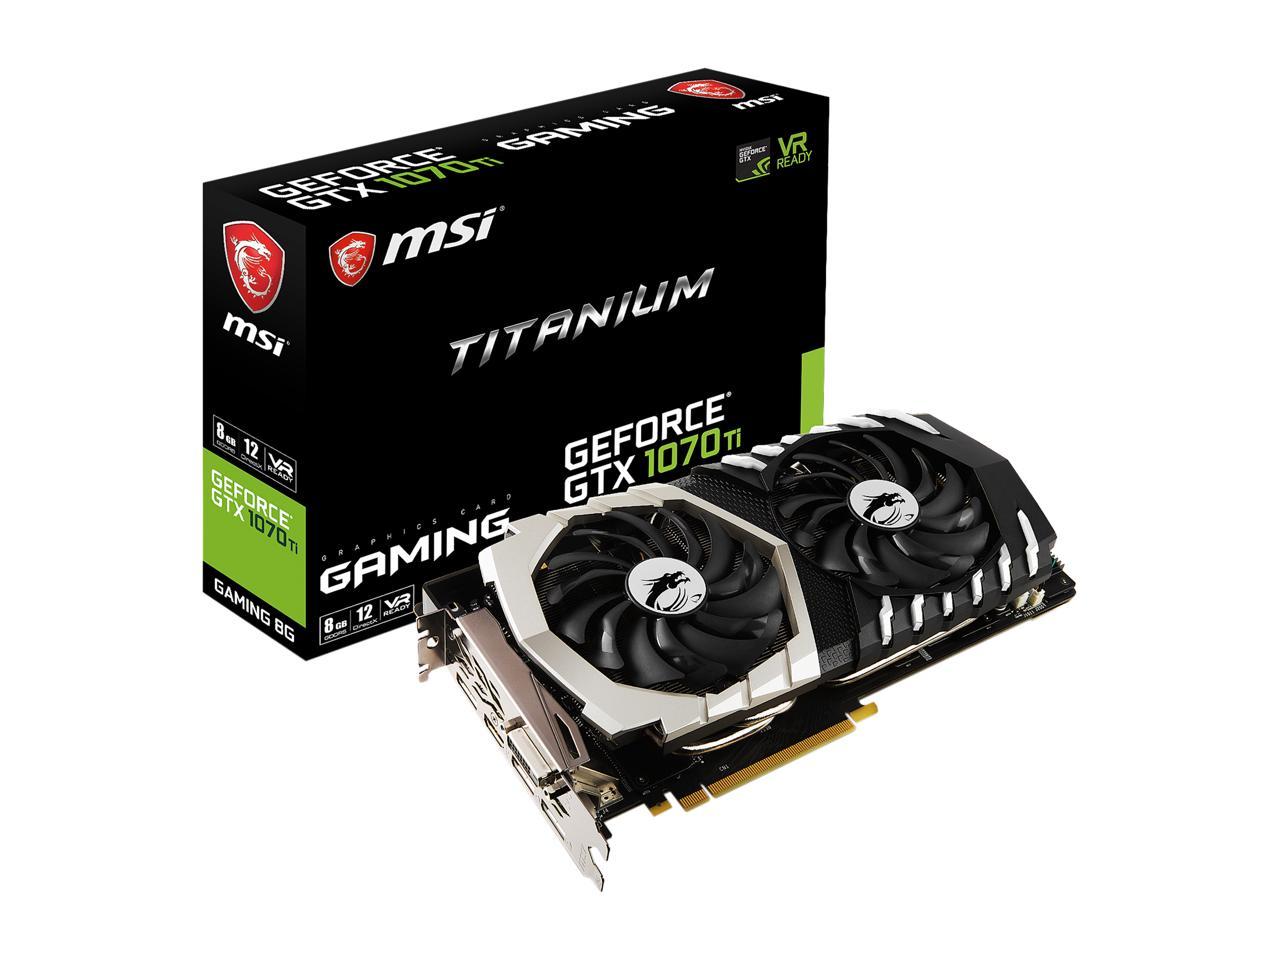 MSI GeForce GTX 1070 Ti Video Card GTX 1070 Ti Titanium 8G 